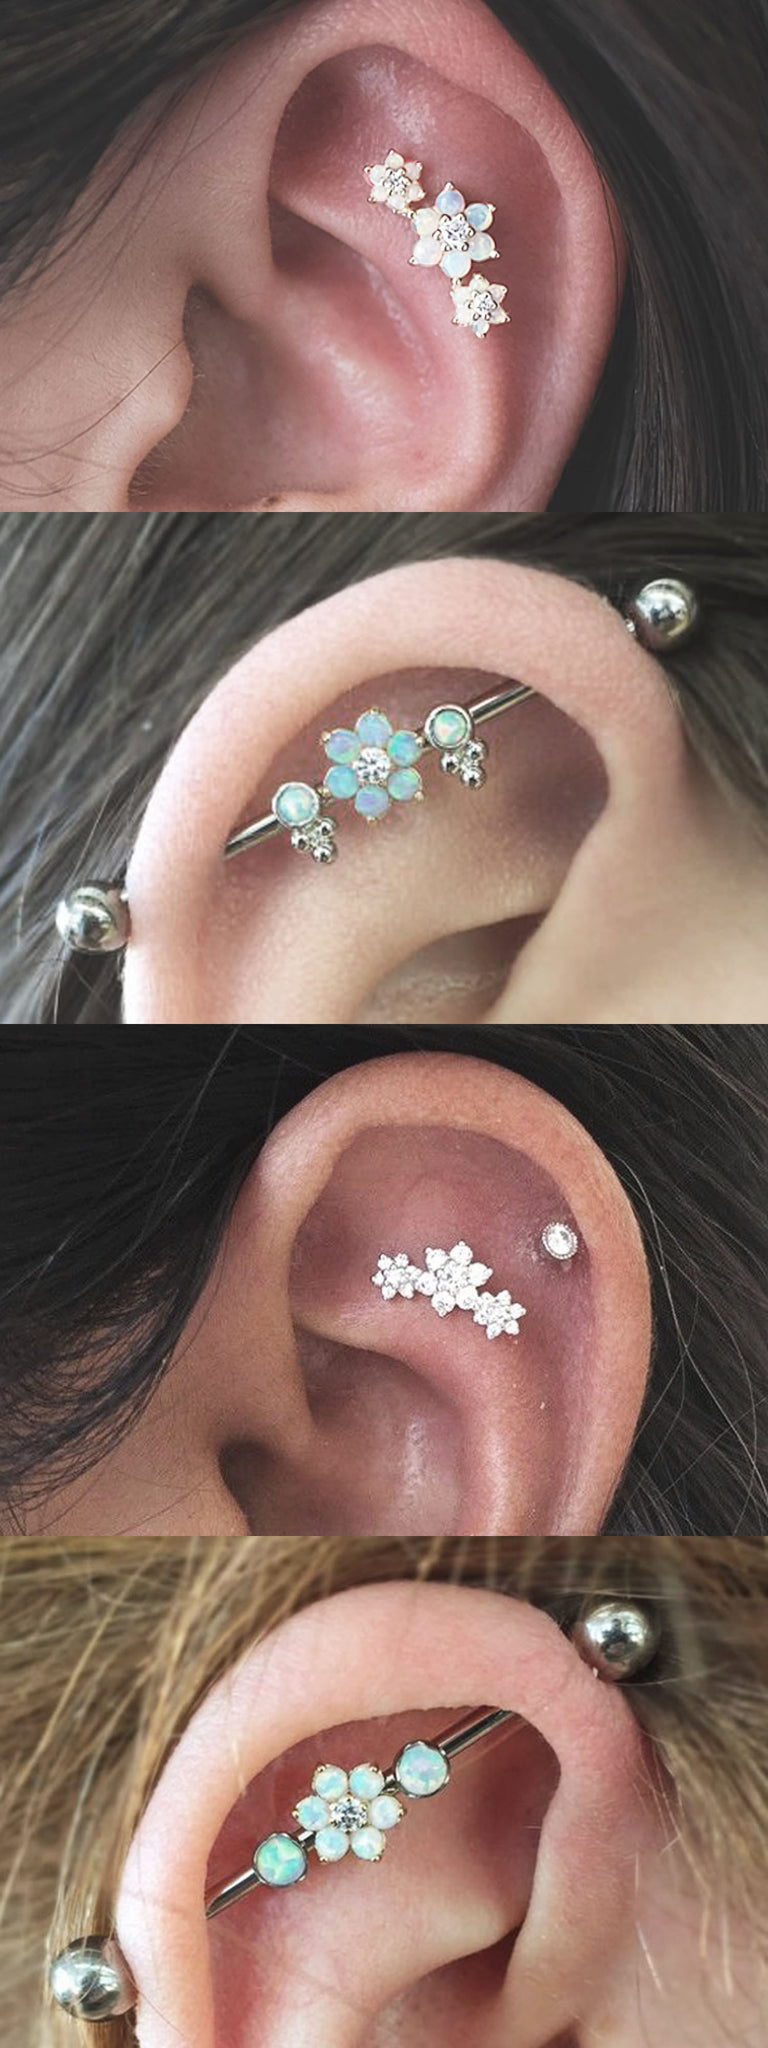 Classy Multiple Ear Piercing Ideas at MyBodiArt.com - Opal Industrial Barbell Piercings - Crystal Flower Cartilage Helix Constellation Stud 16G